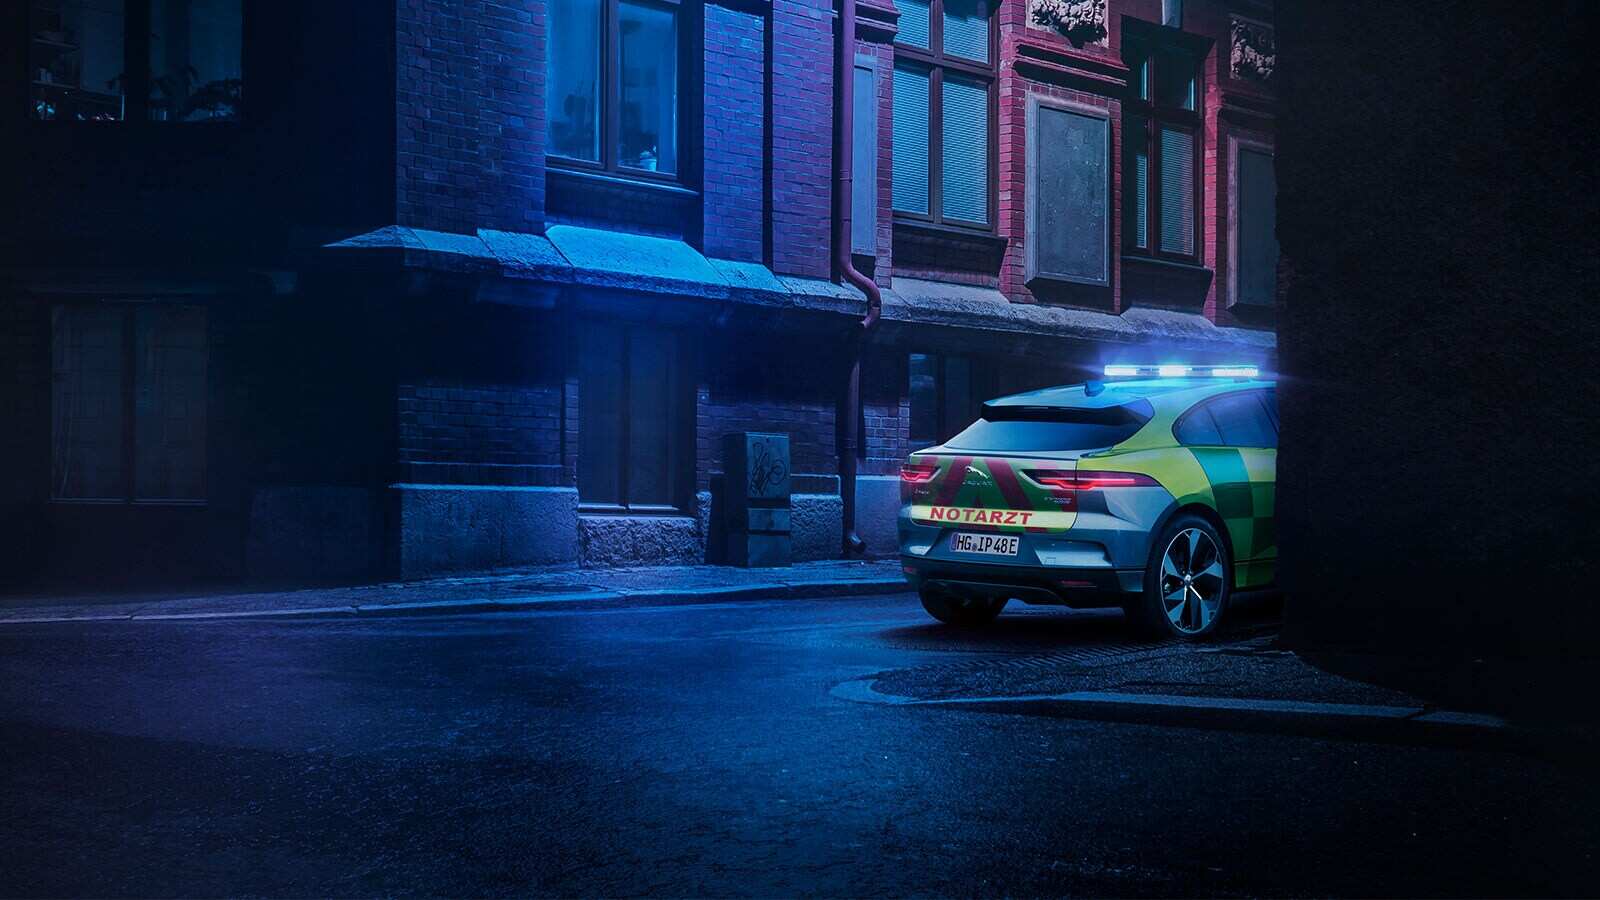 Jaguar police vehicle